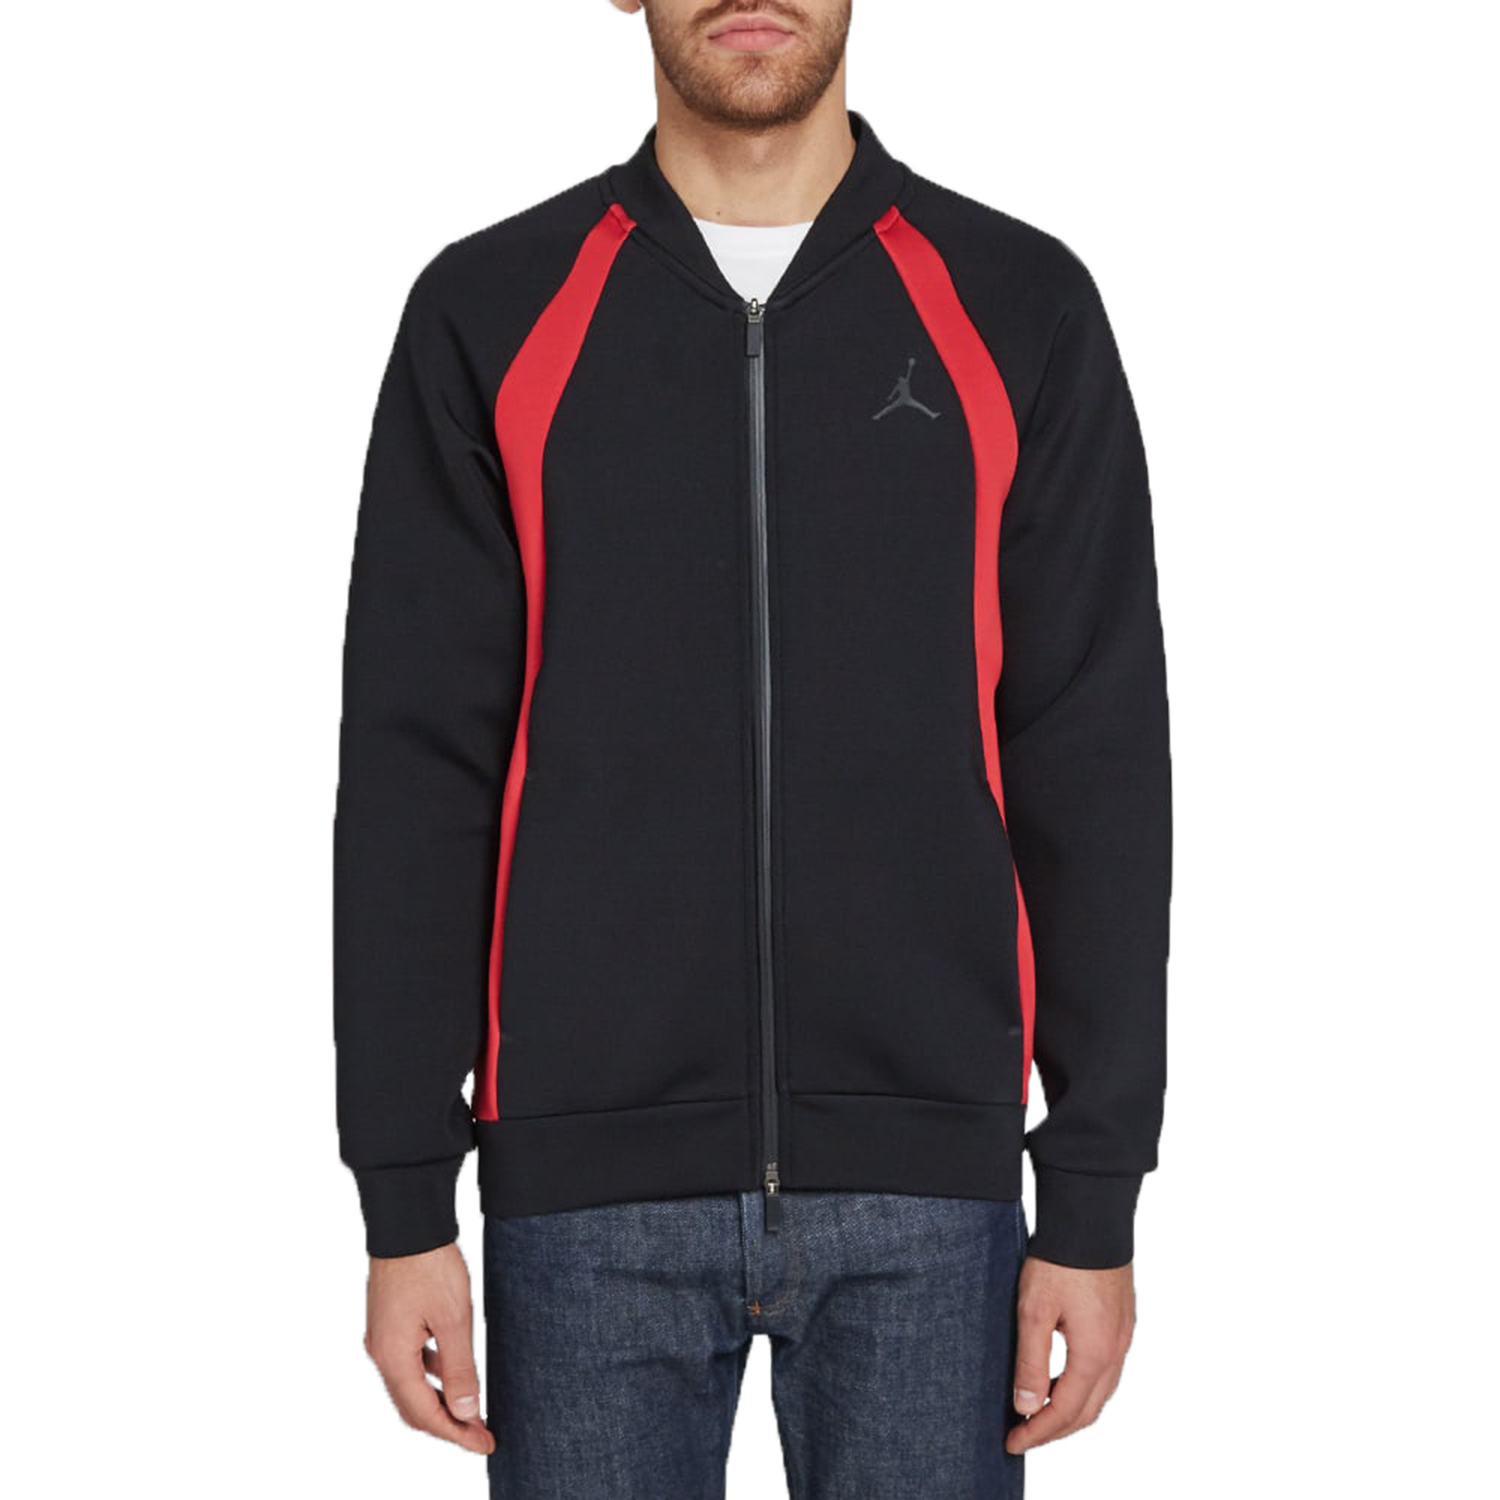 Michael Jordan Air Jordan Flight Tech Men's Sportswear Casual Jacket Black/Red  887776-011 (Size M)